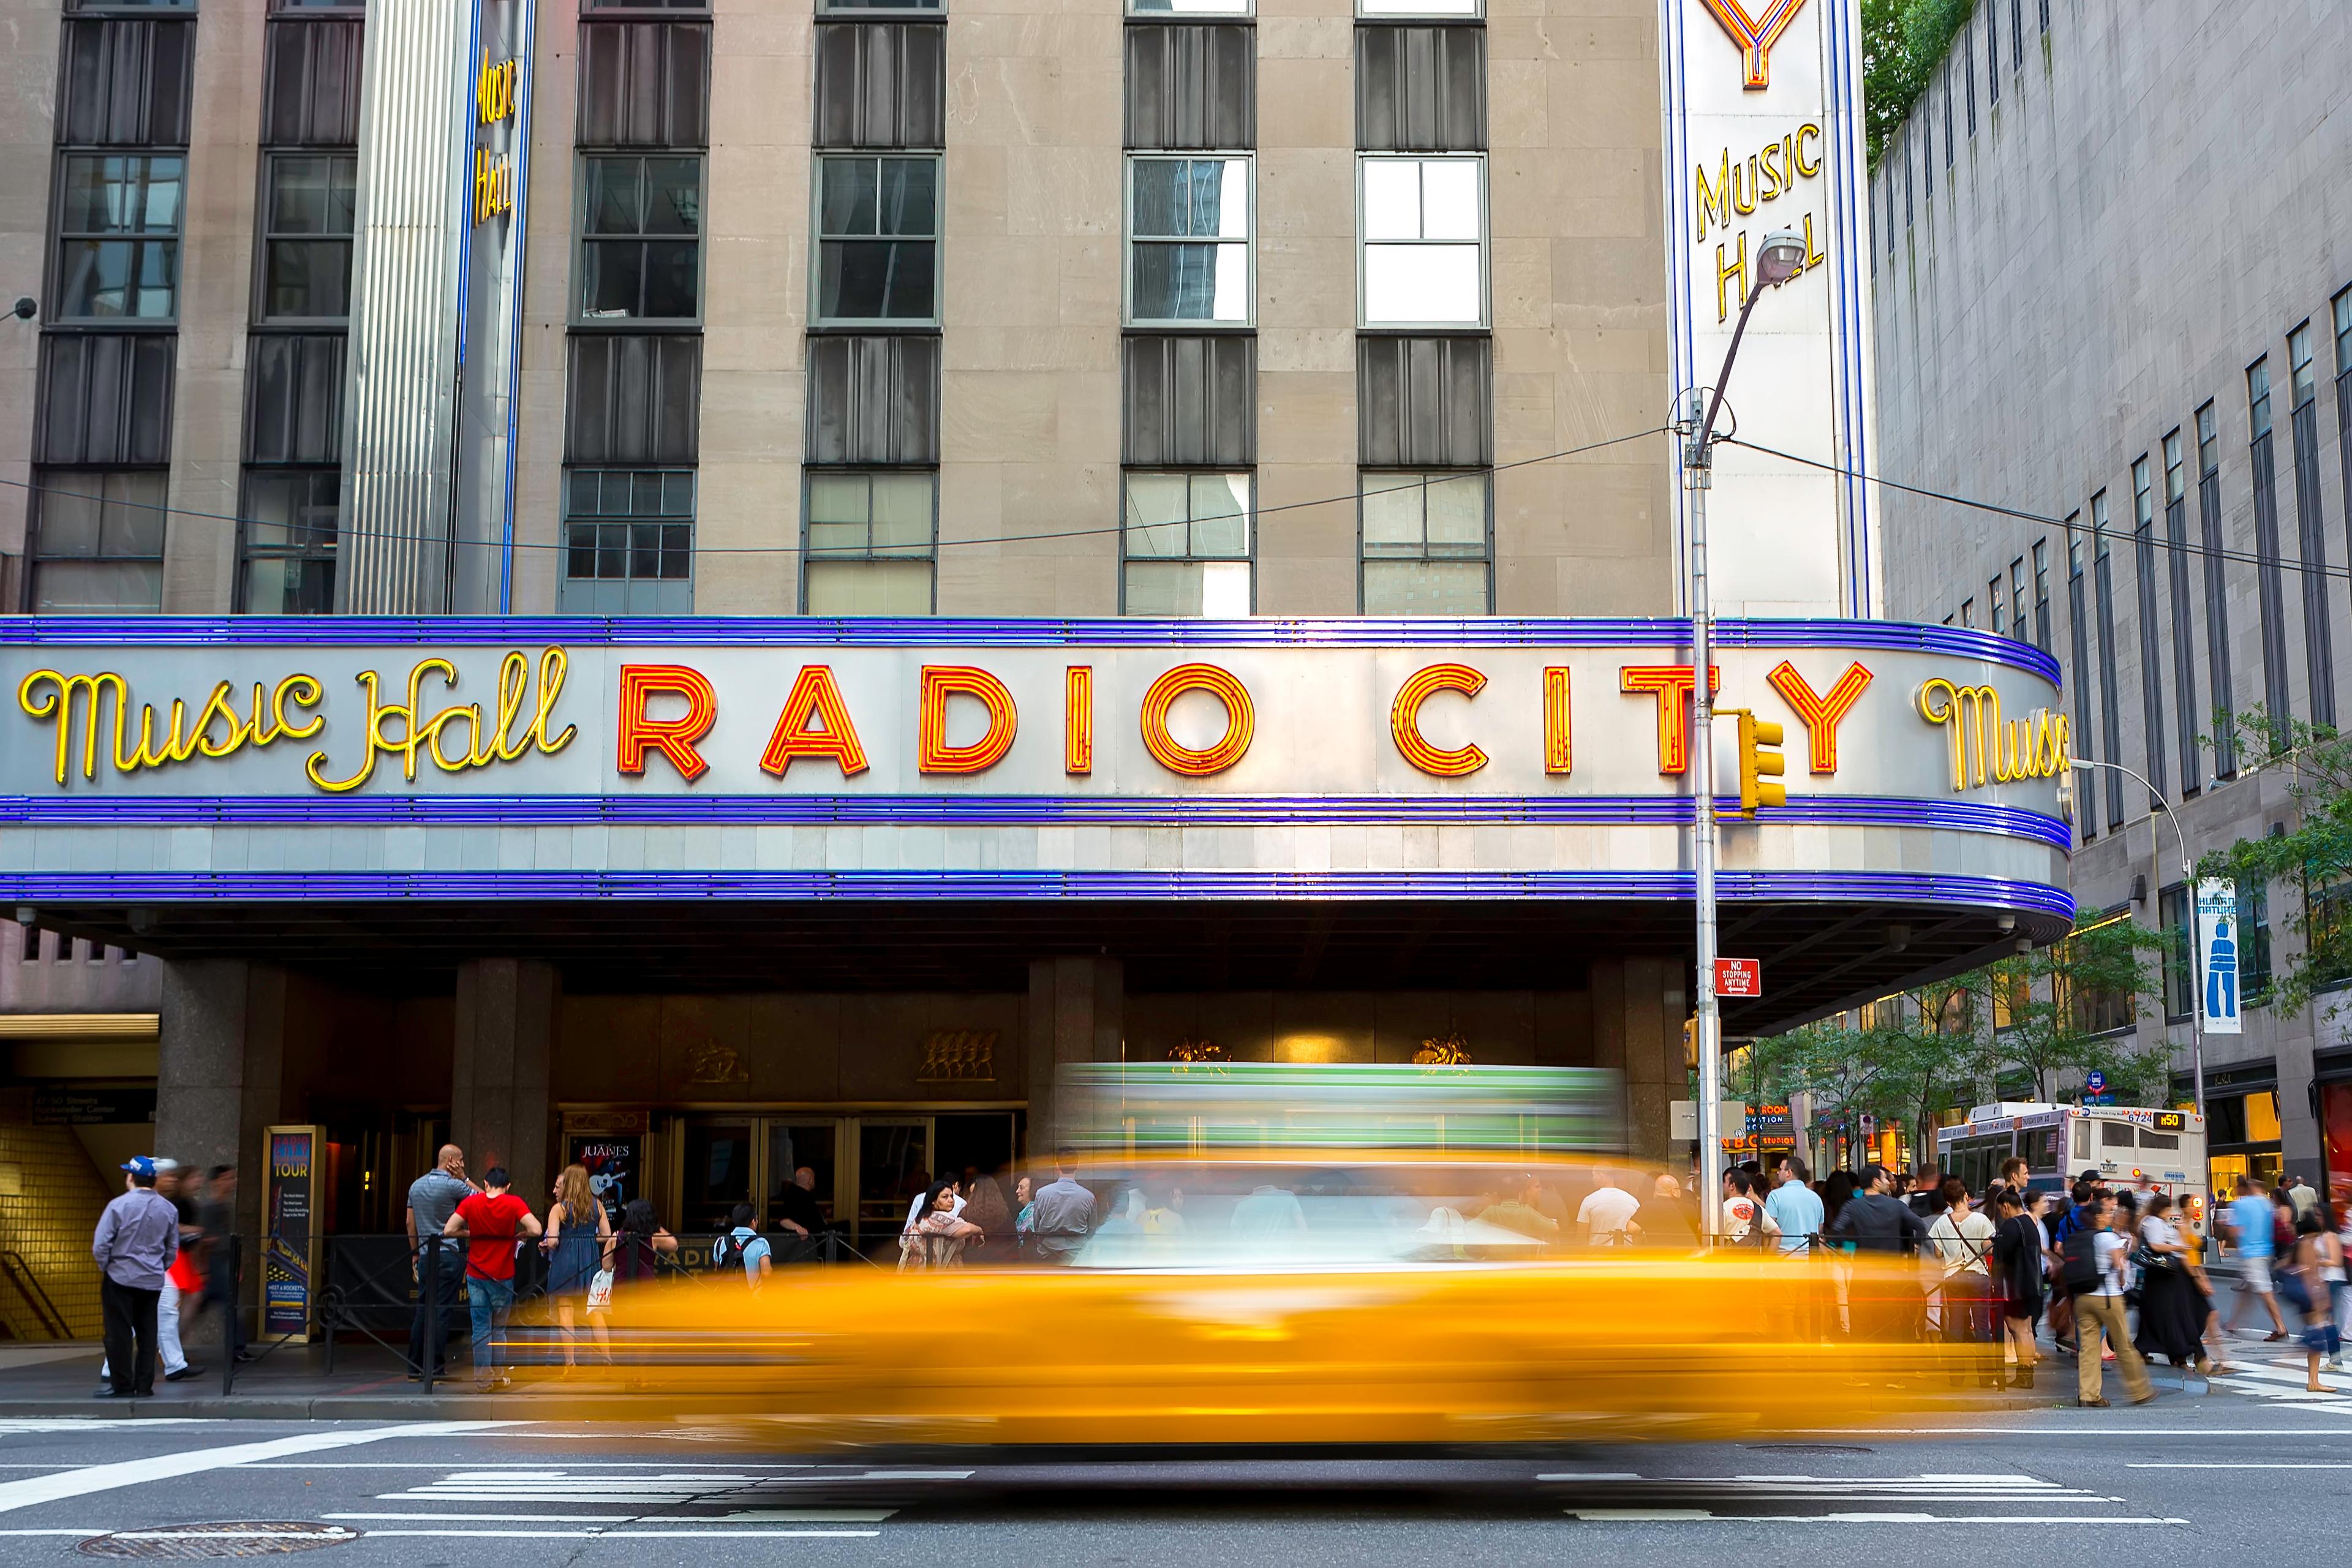 Radio City Hall exterior